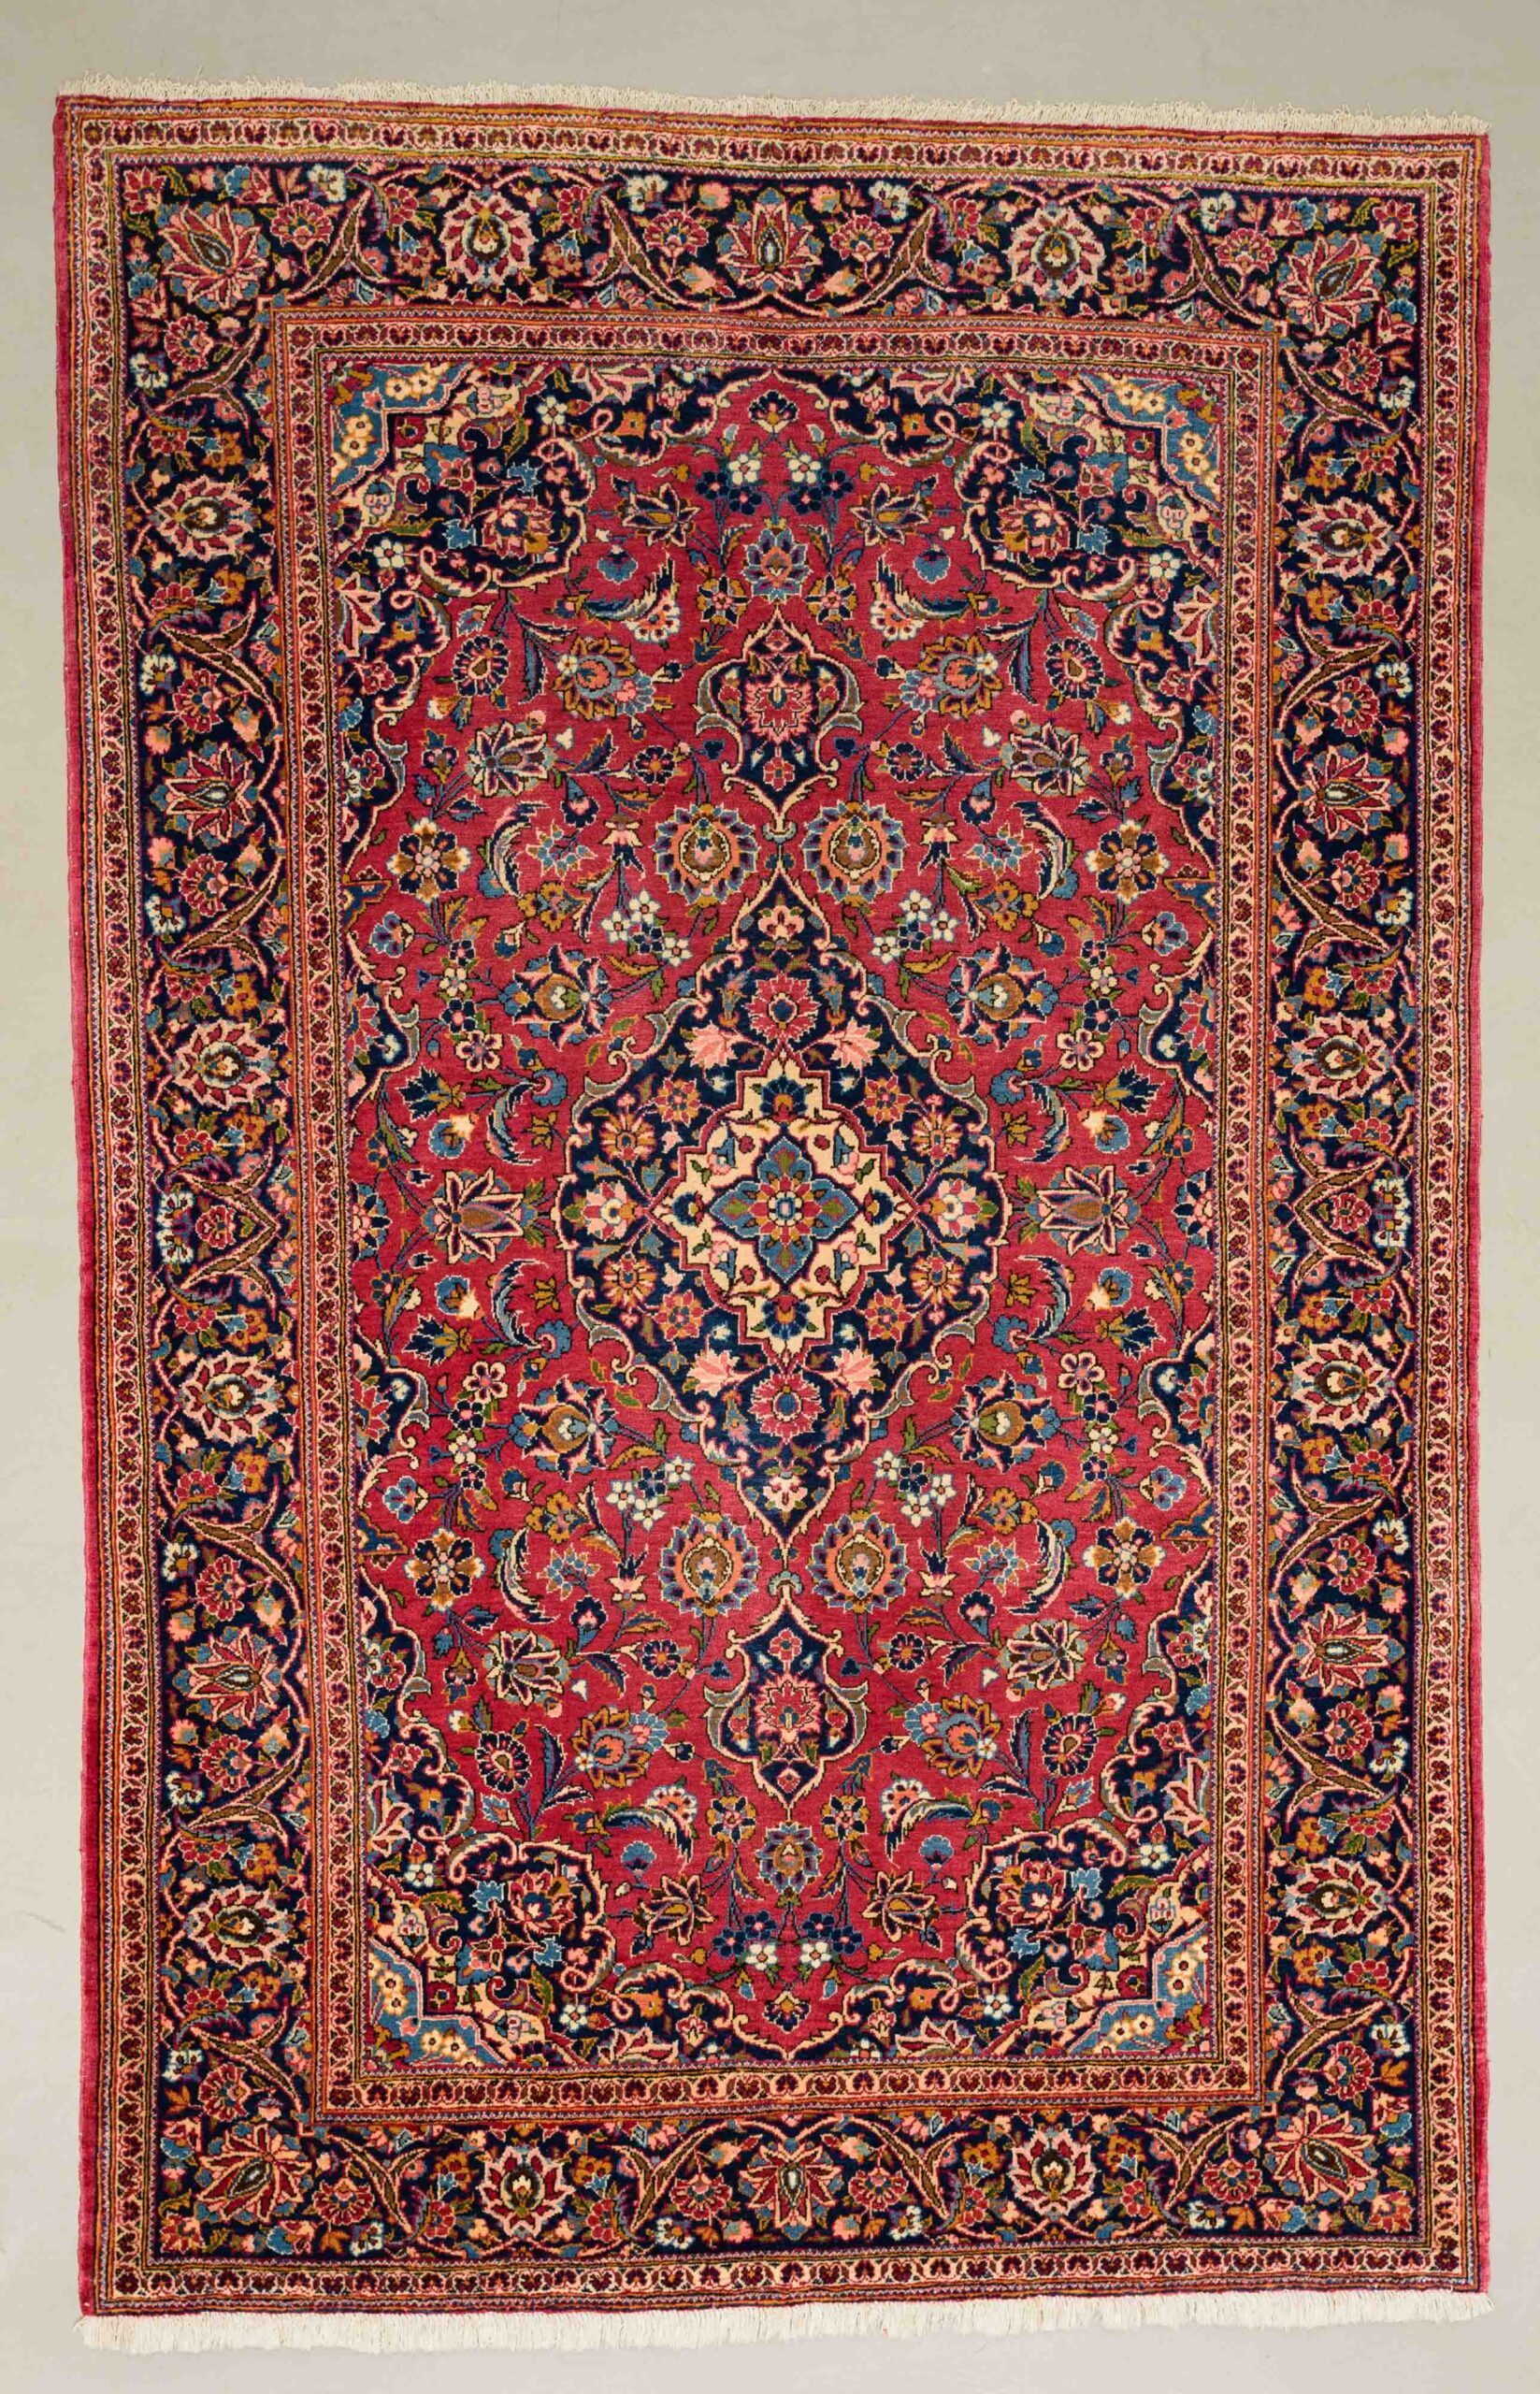 Carpets & Rugs - Kashan Tæppe (tg01041)